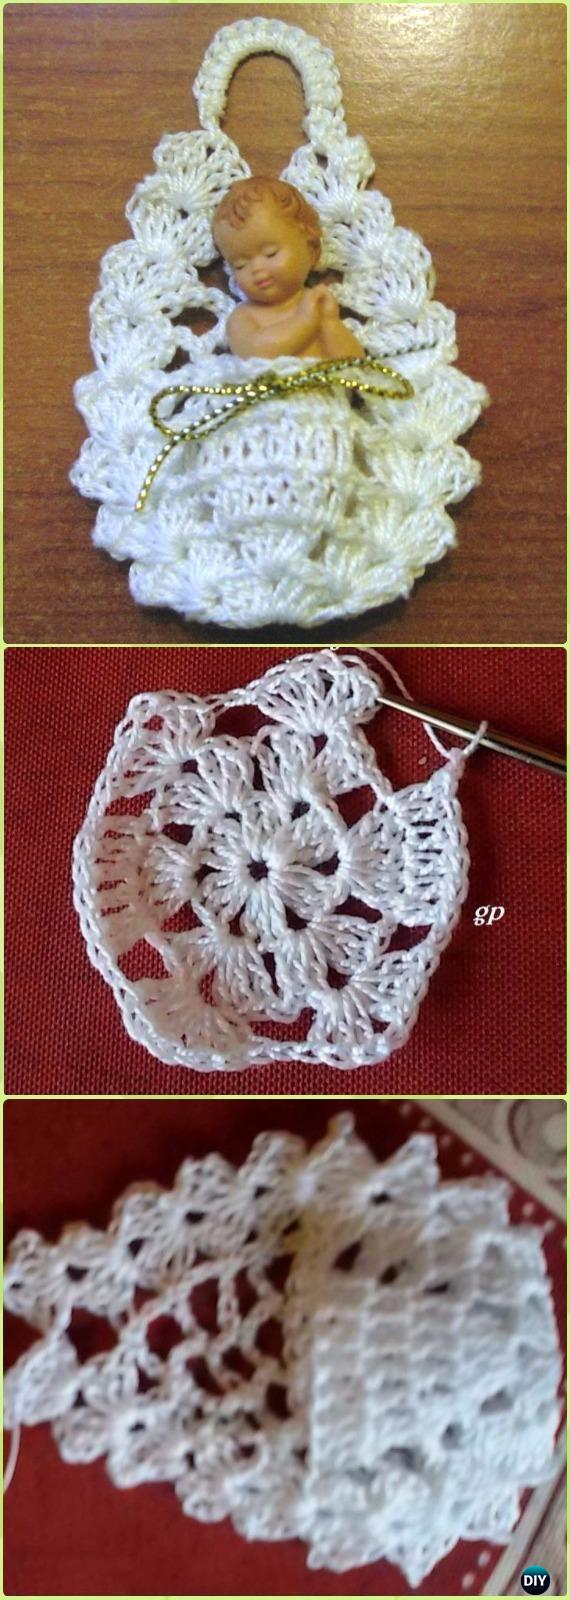 DIY Crochet Christmas Ornament Free Patterns